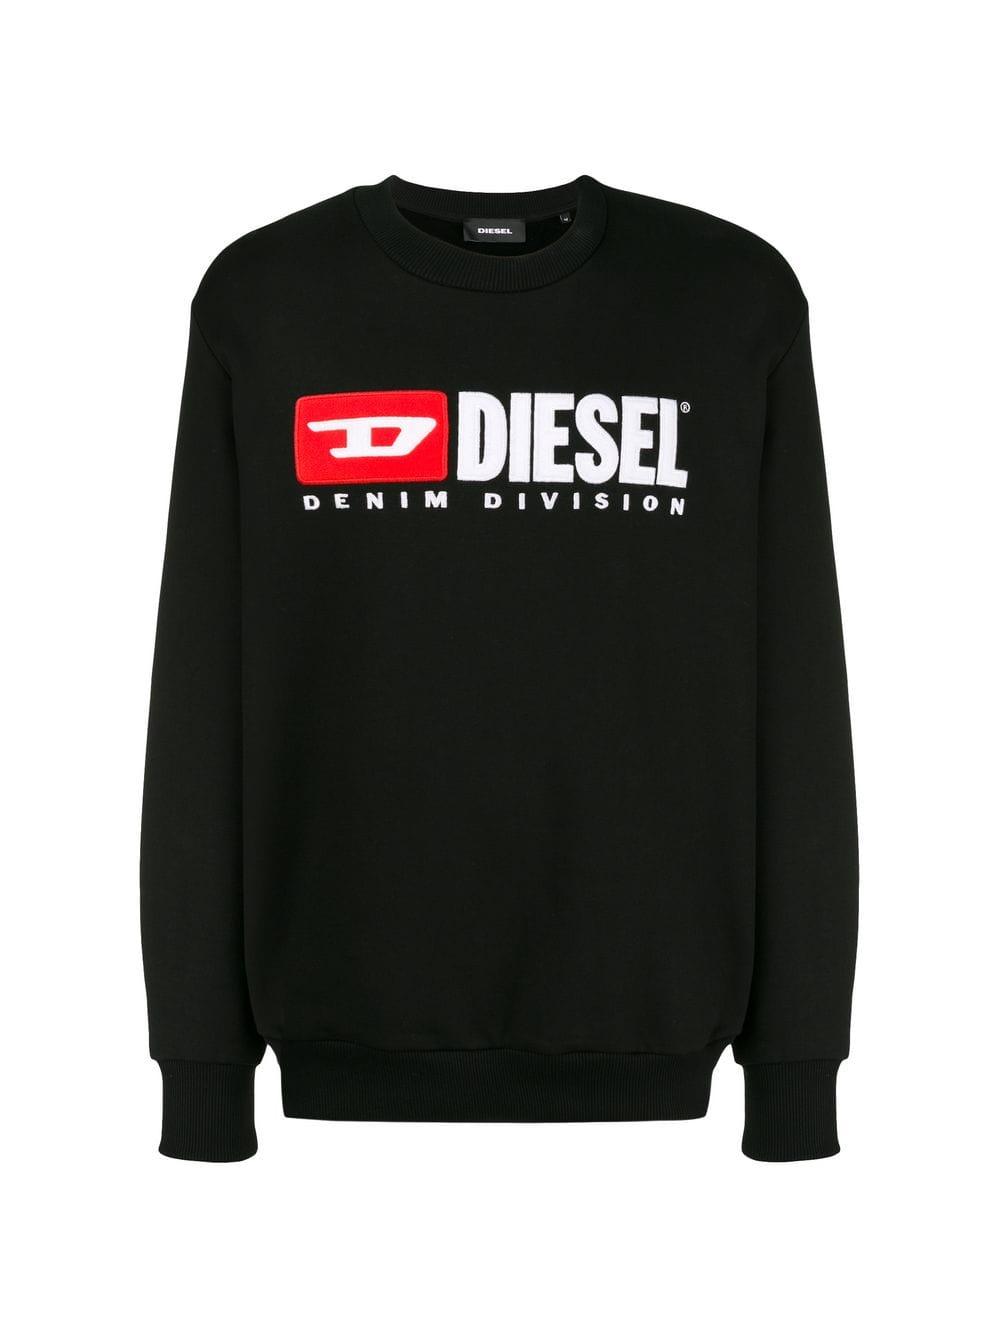 DIESEL Felt Division Crew Sweatshirt in Black for Men - Save 61% - Lyst